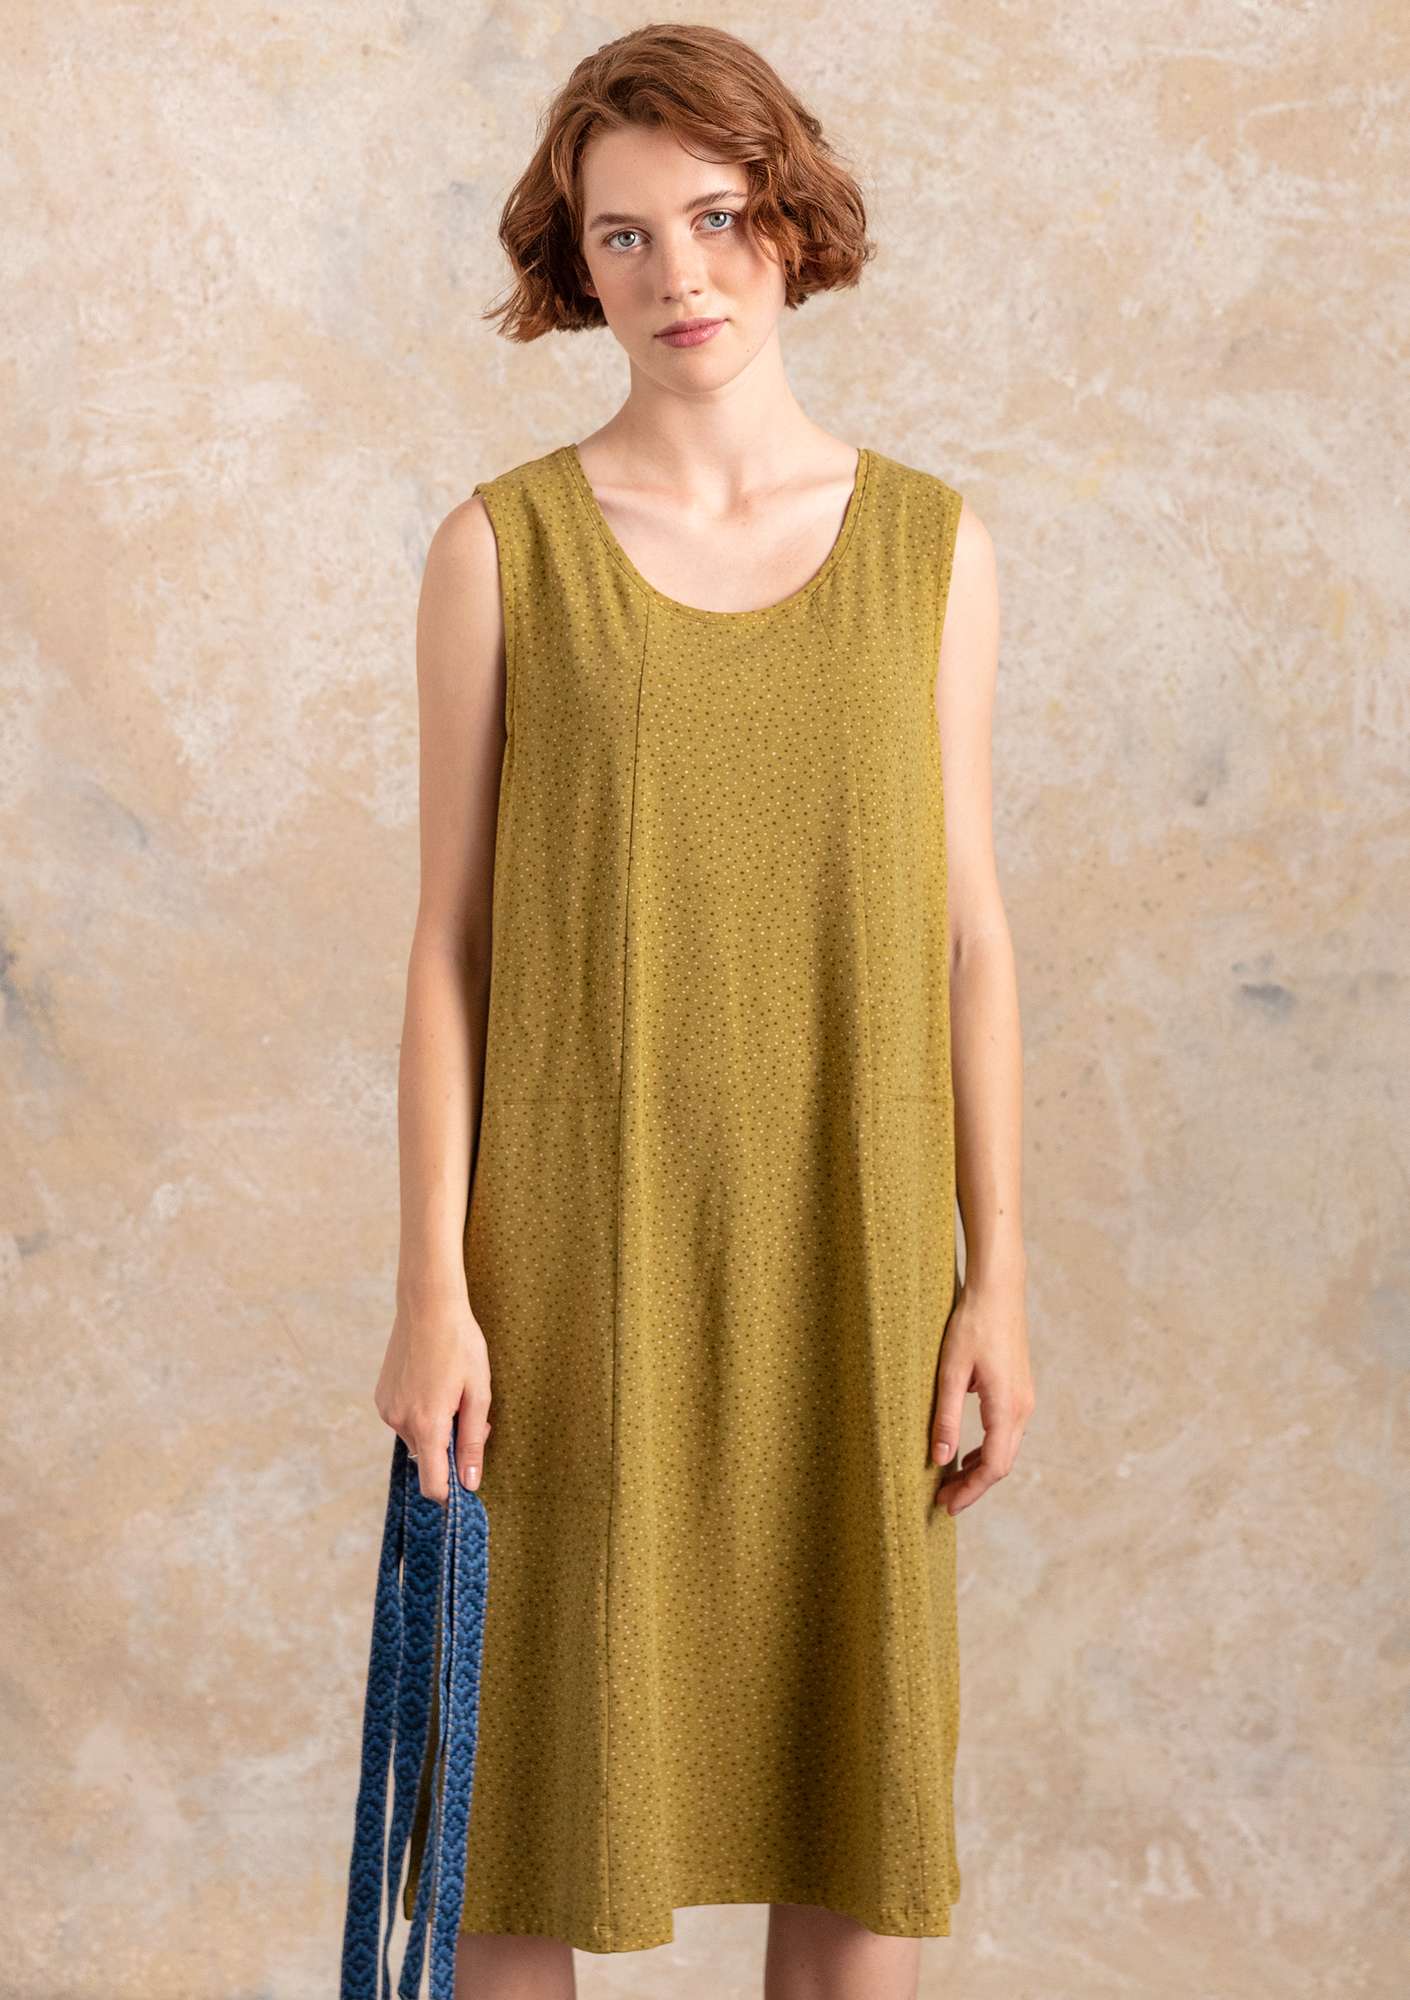 Trikåklänning Iliana olive/patterned